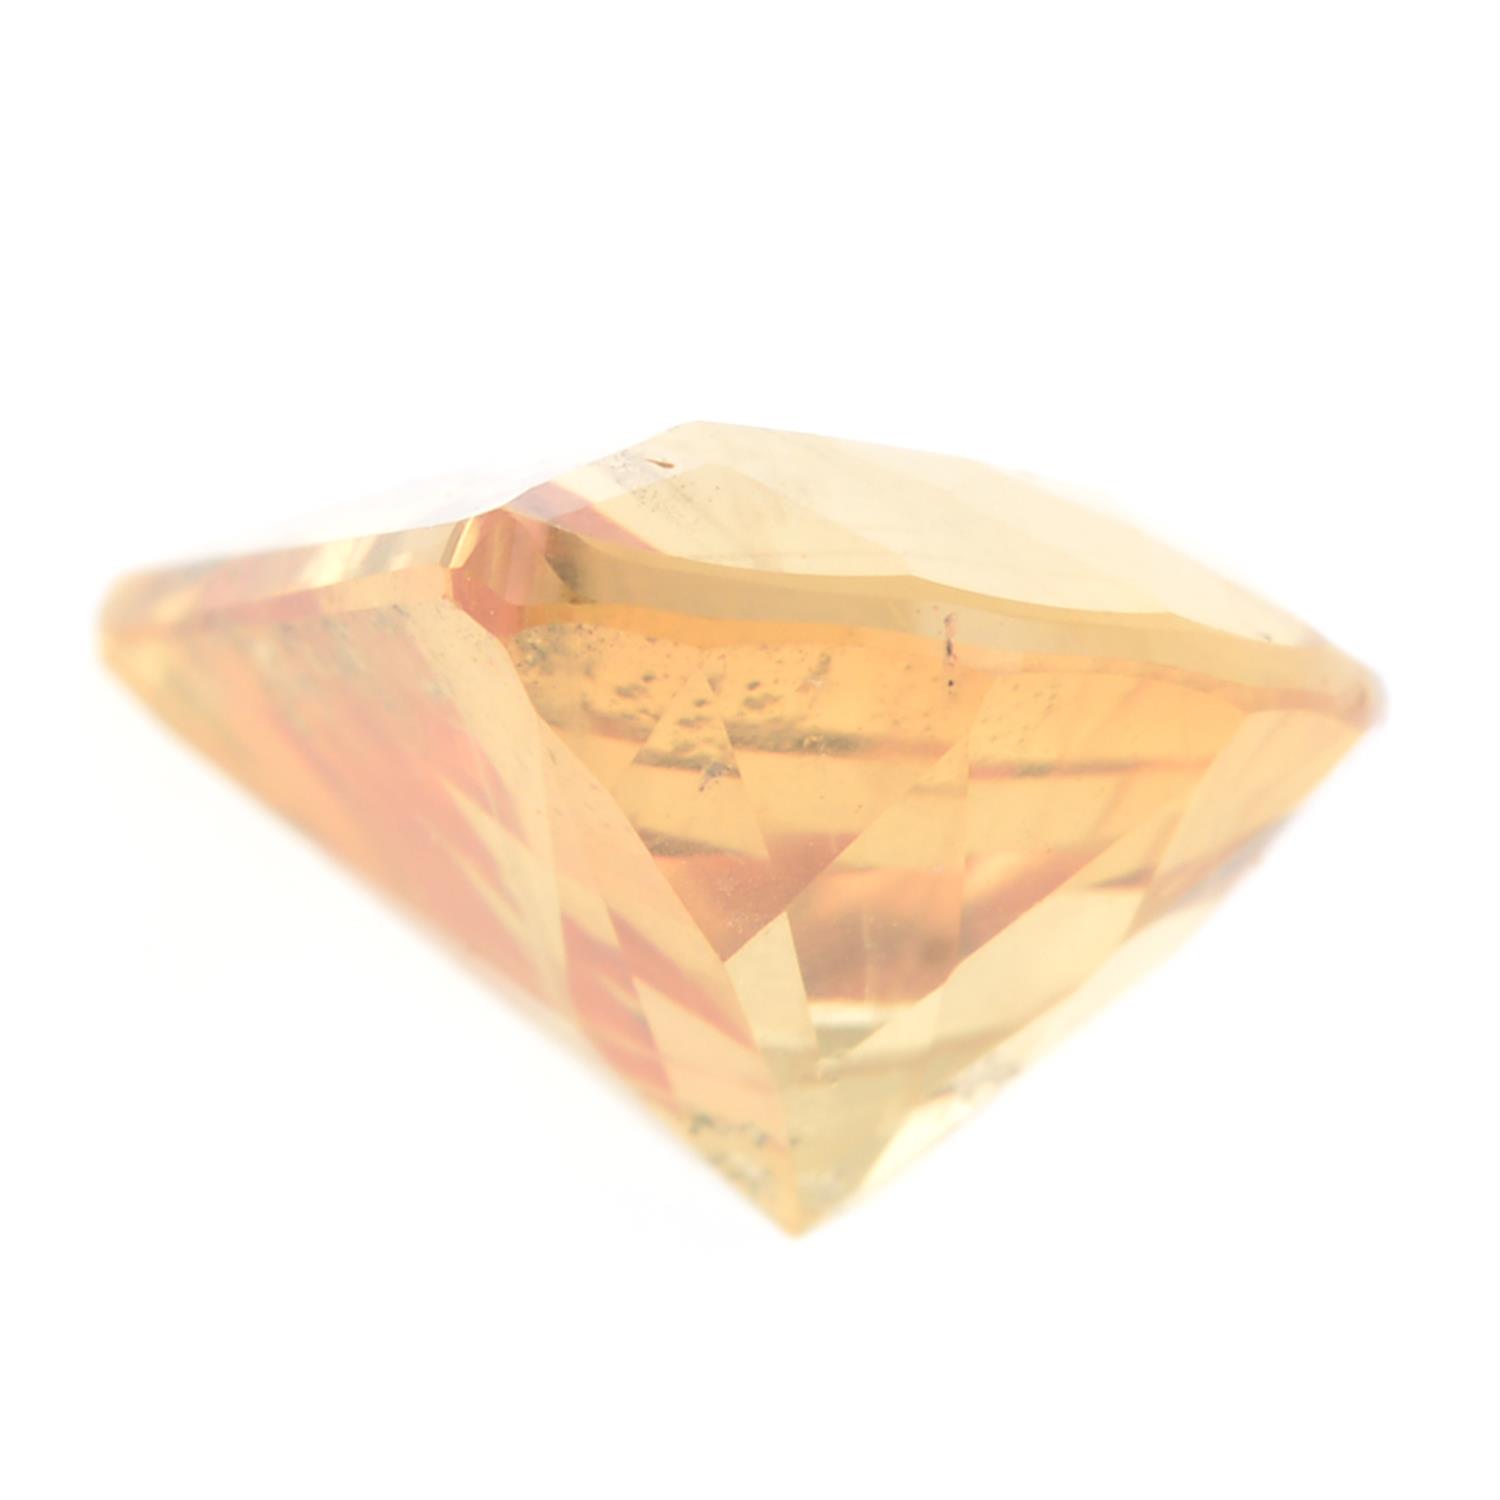 Fancy-shape sapphire, 2.52ct - Image 2 of 2